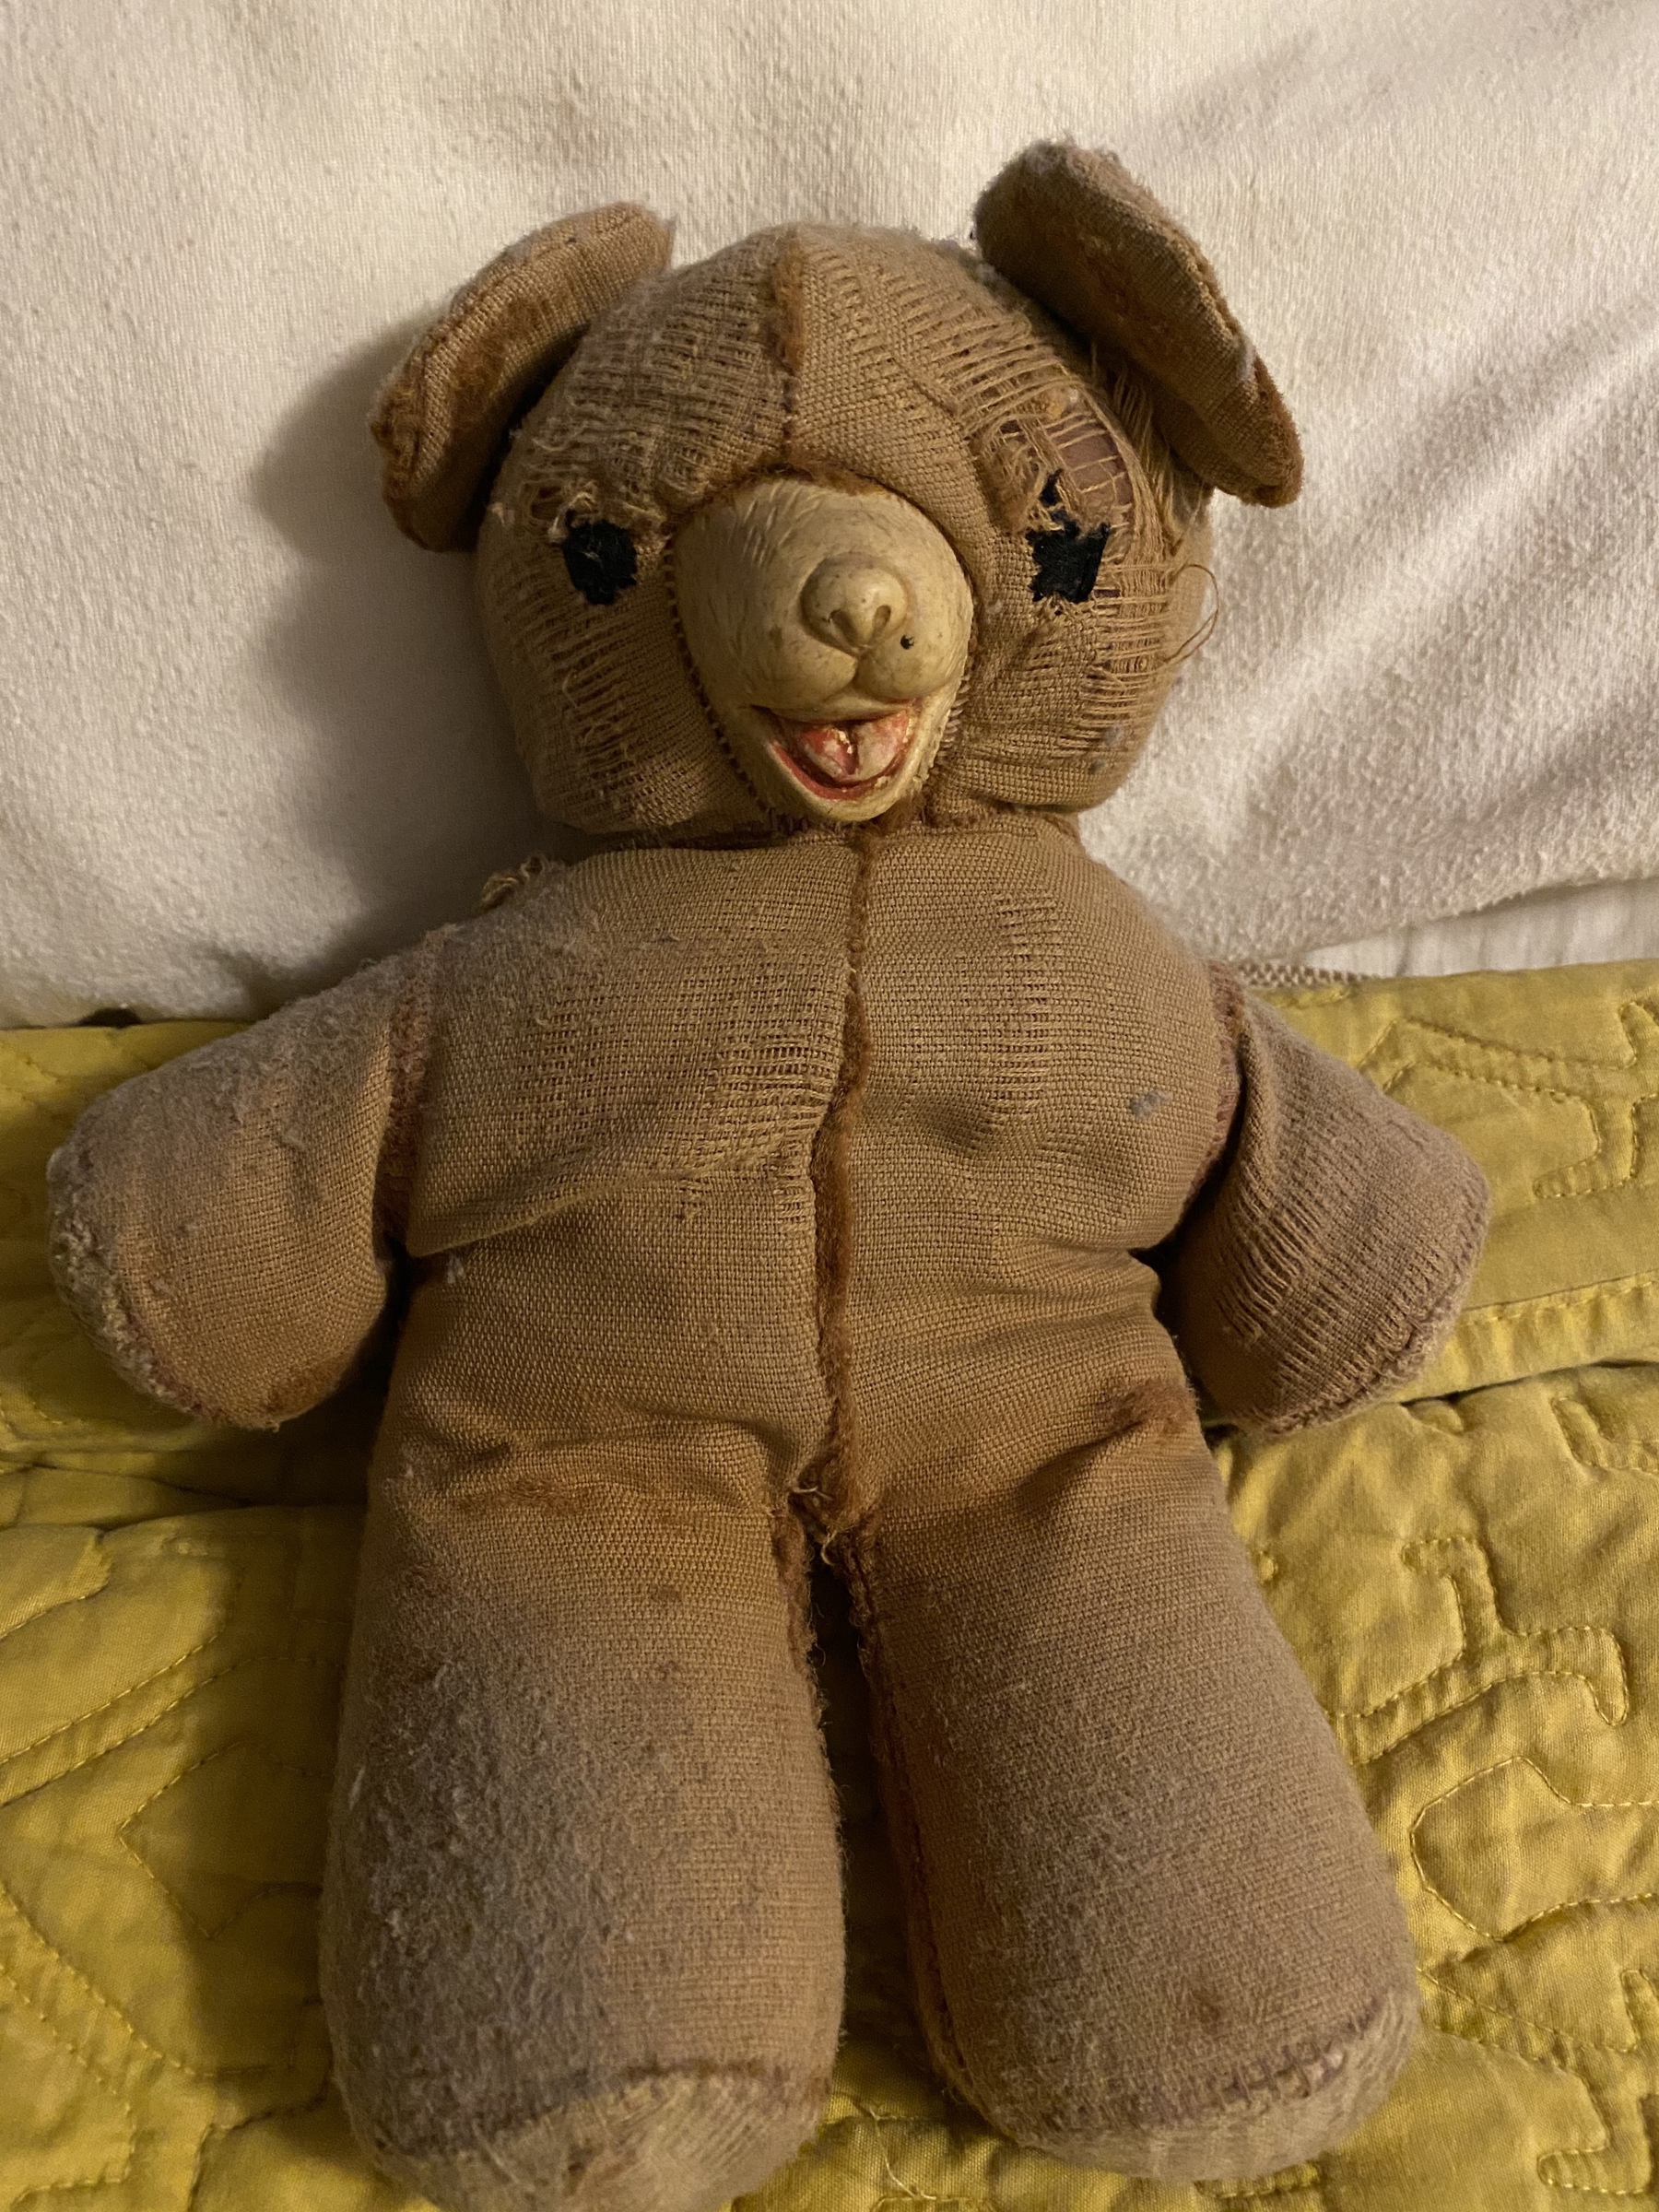 Close up of a very worn small stuffed bear.